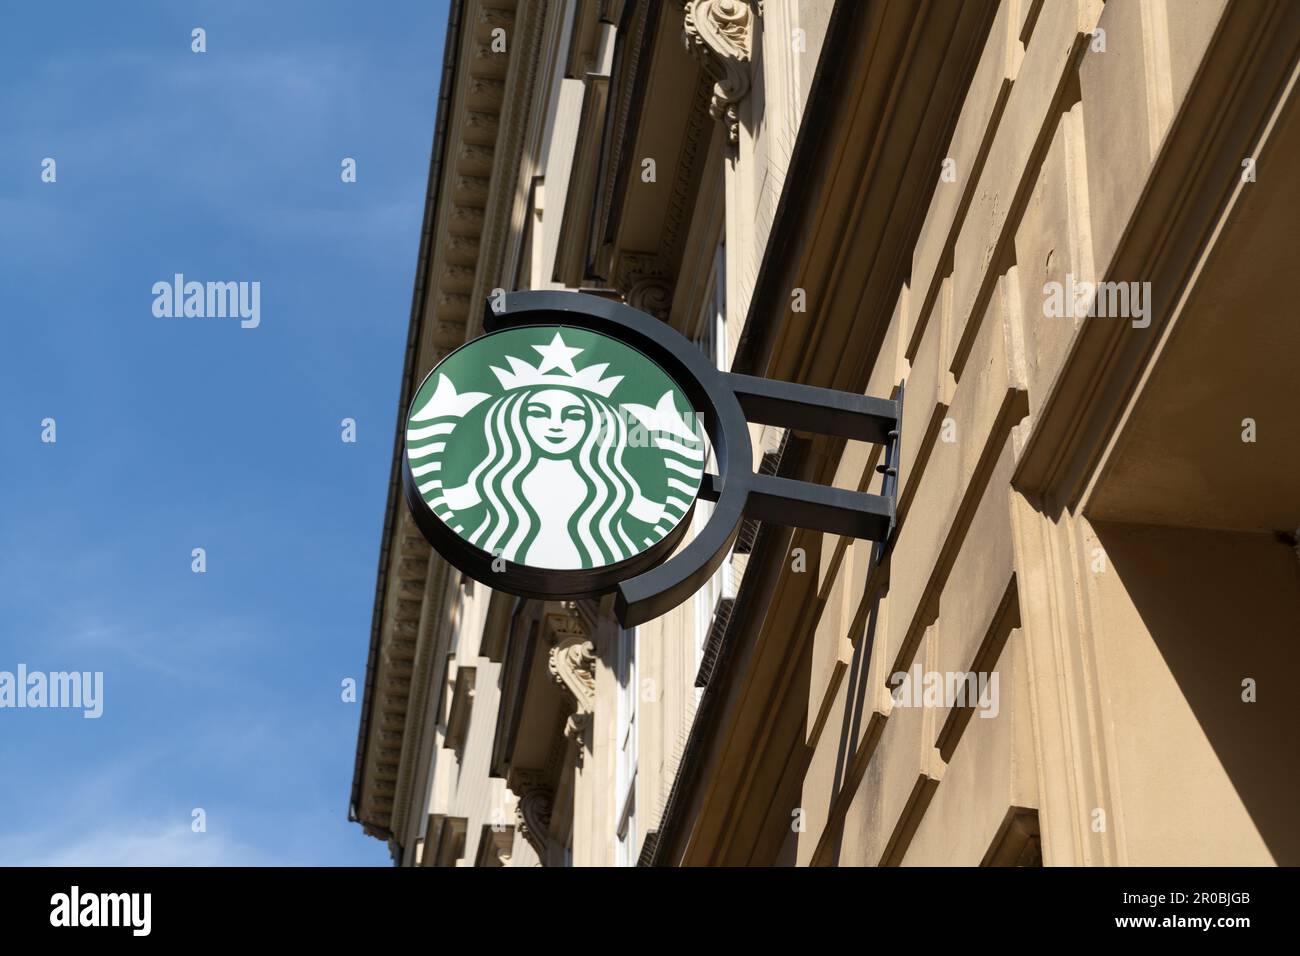 Starbucks coffee logo sign. American coffeehouse chain company. Stock Photo